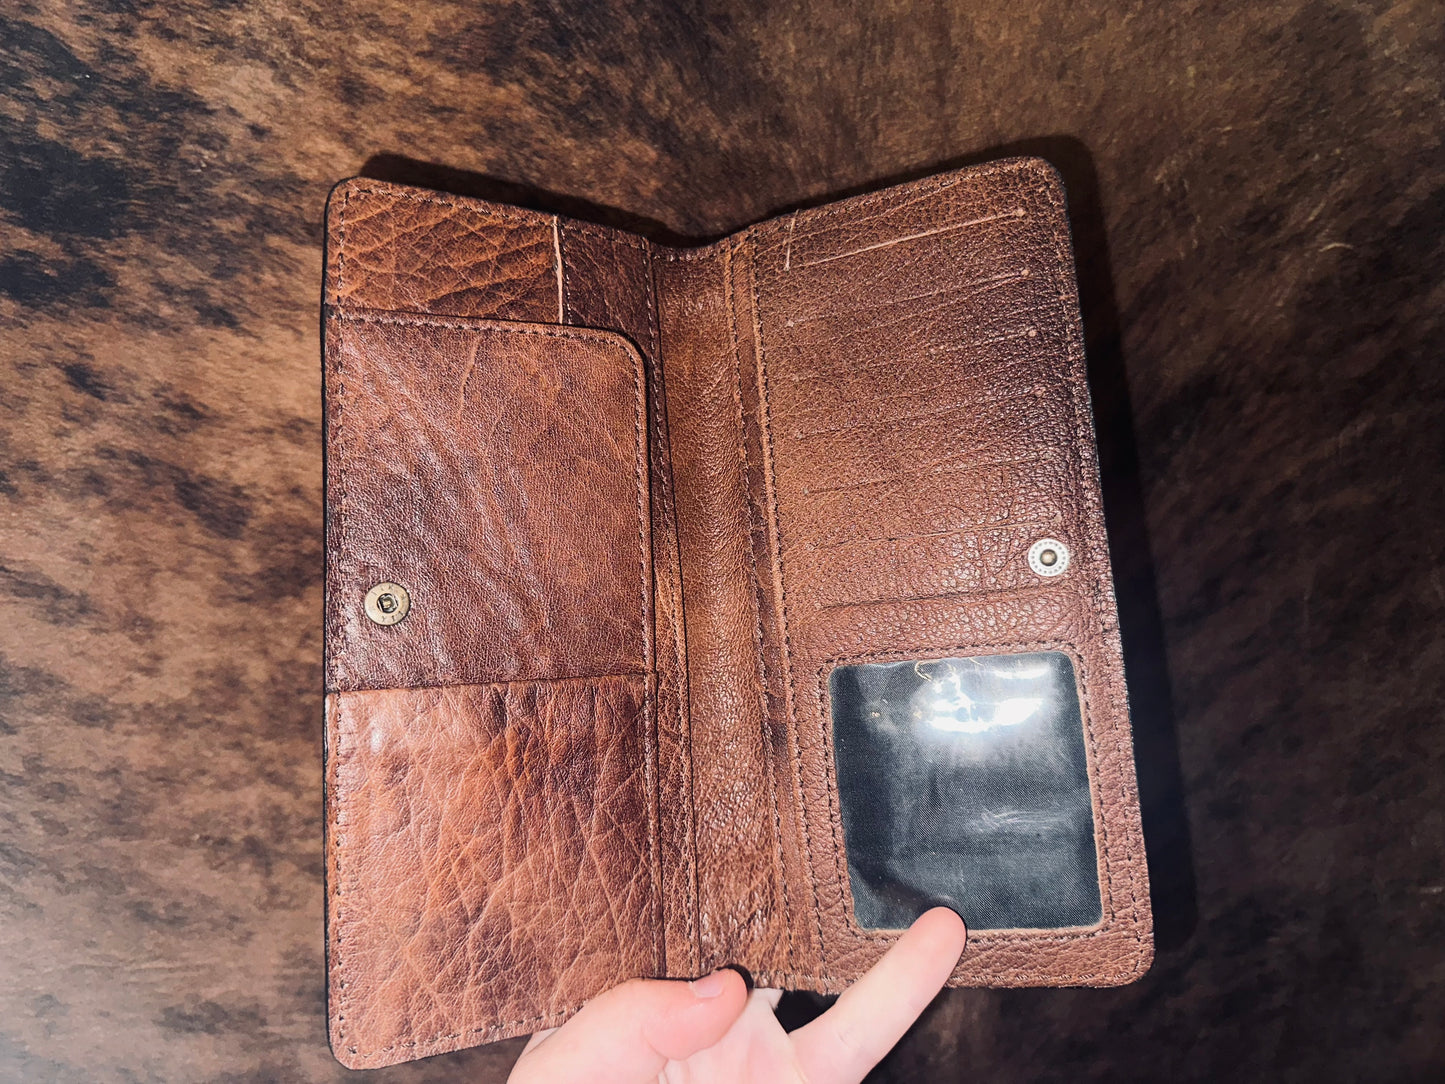 The Cactus Blu’s wallet